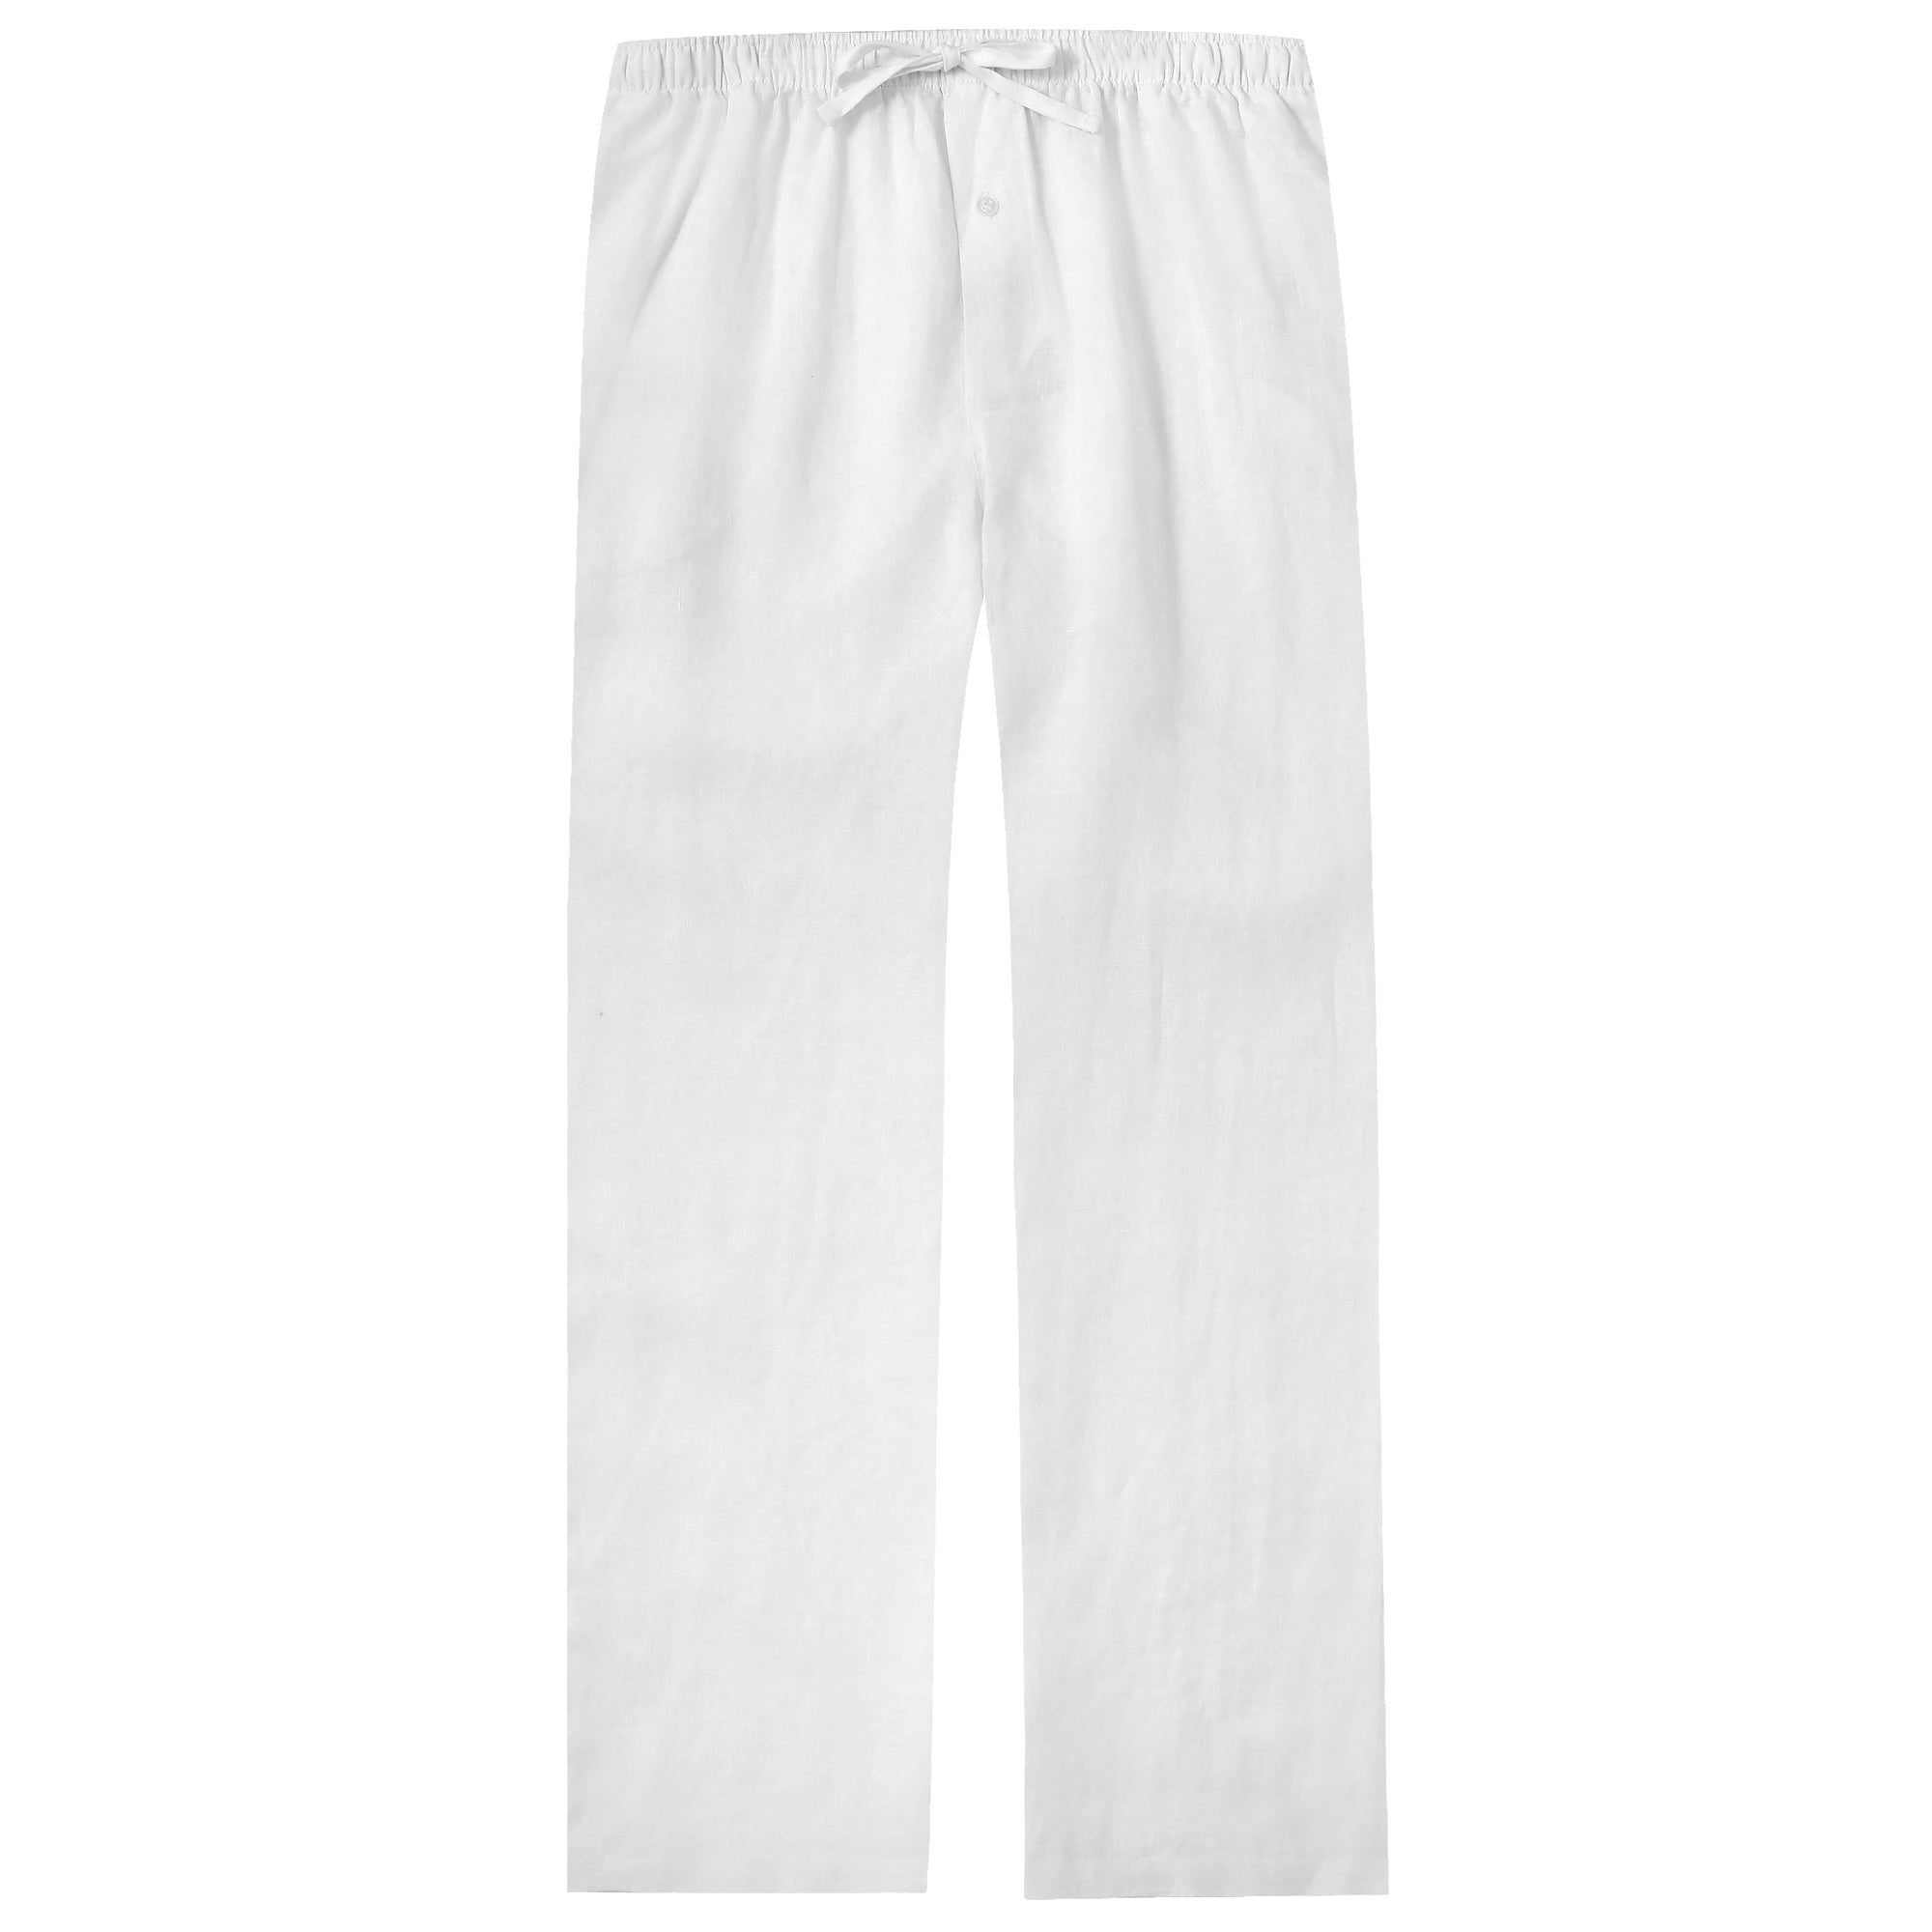 Noble Mount 100% Linen Men's Pajama Lounge Pants